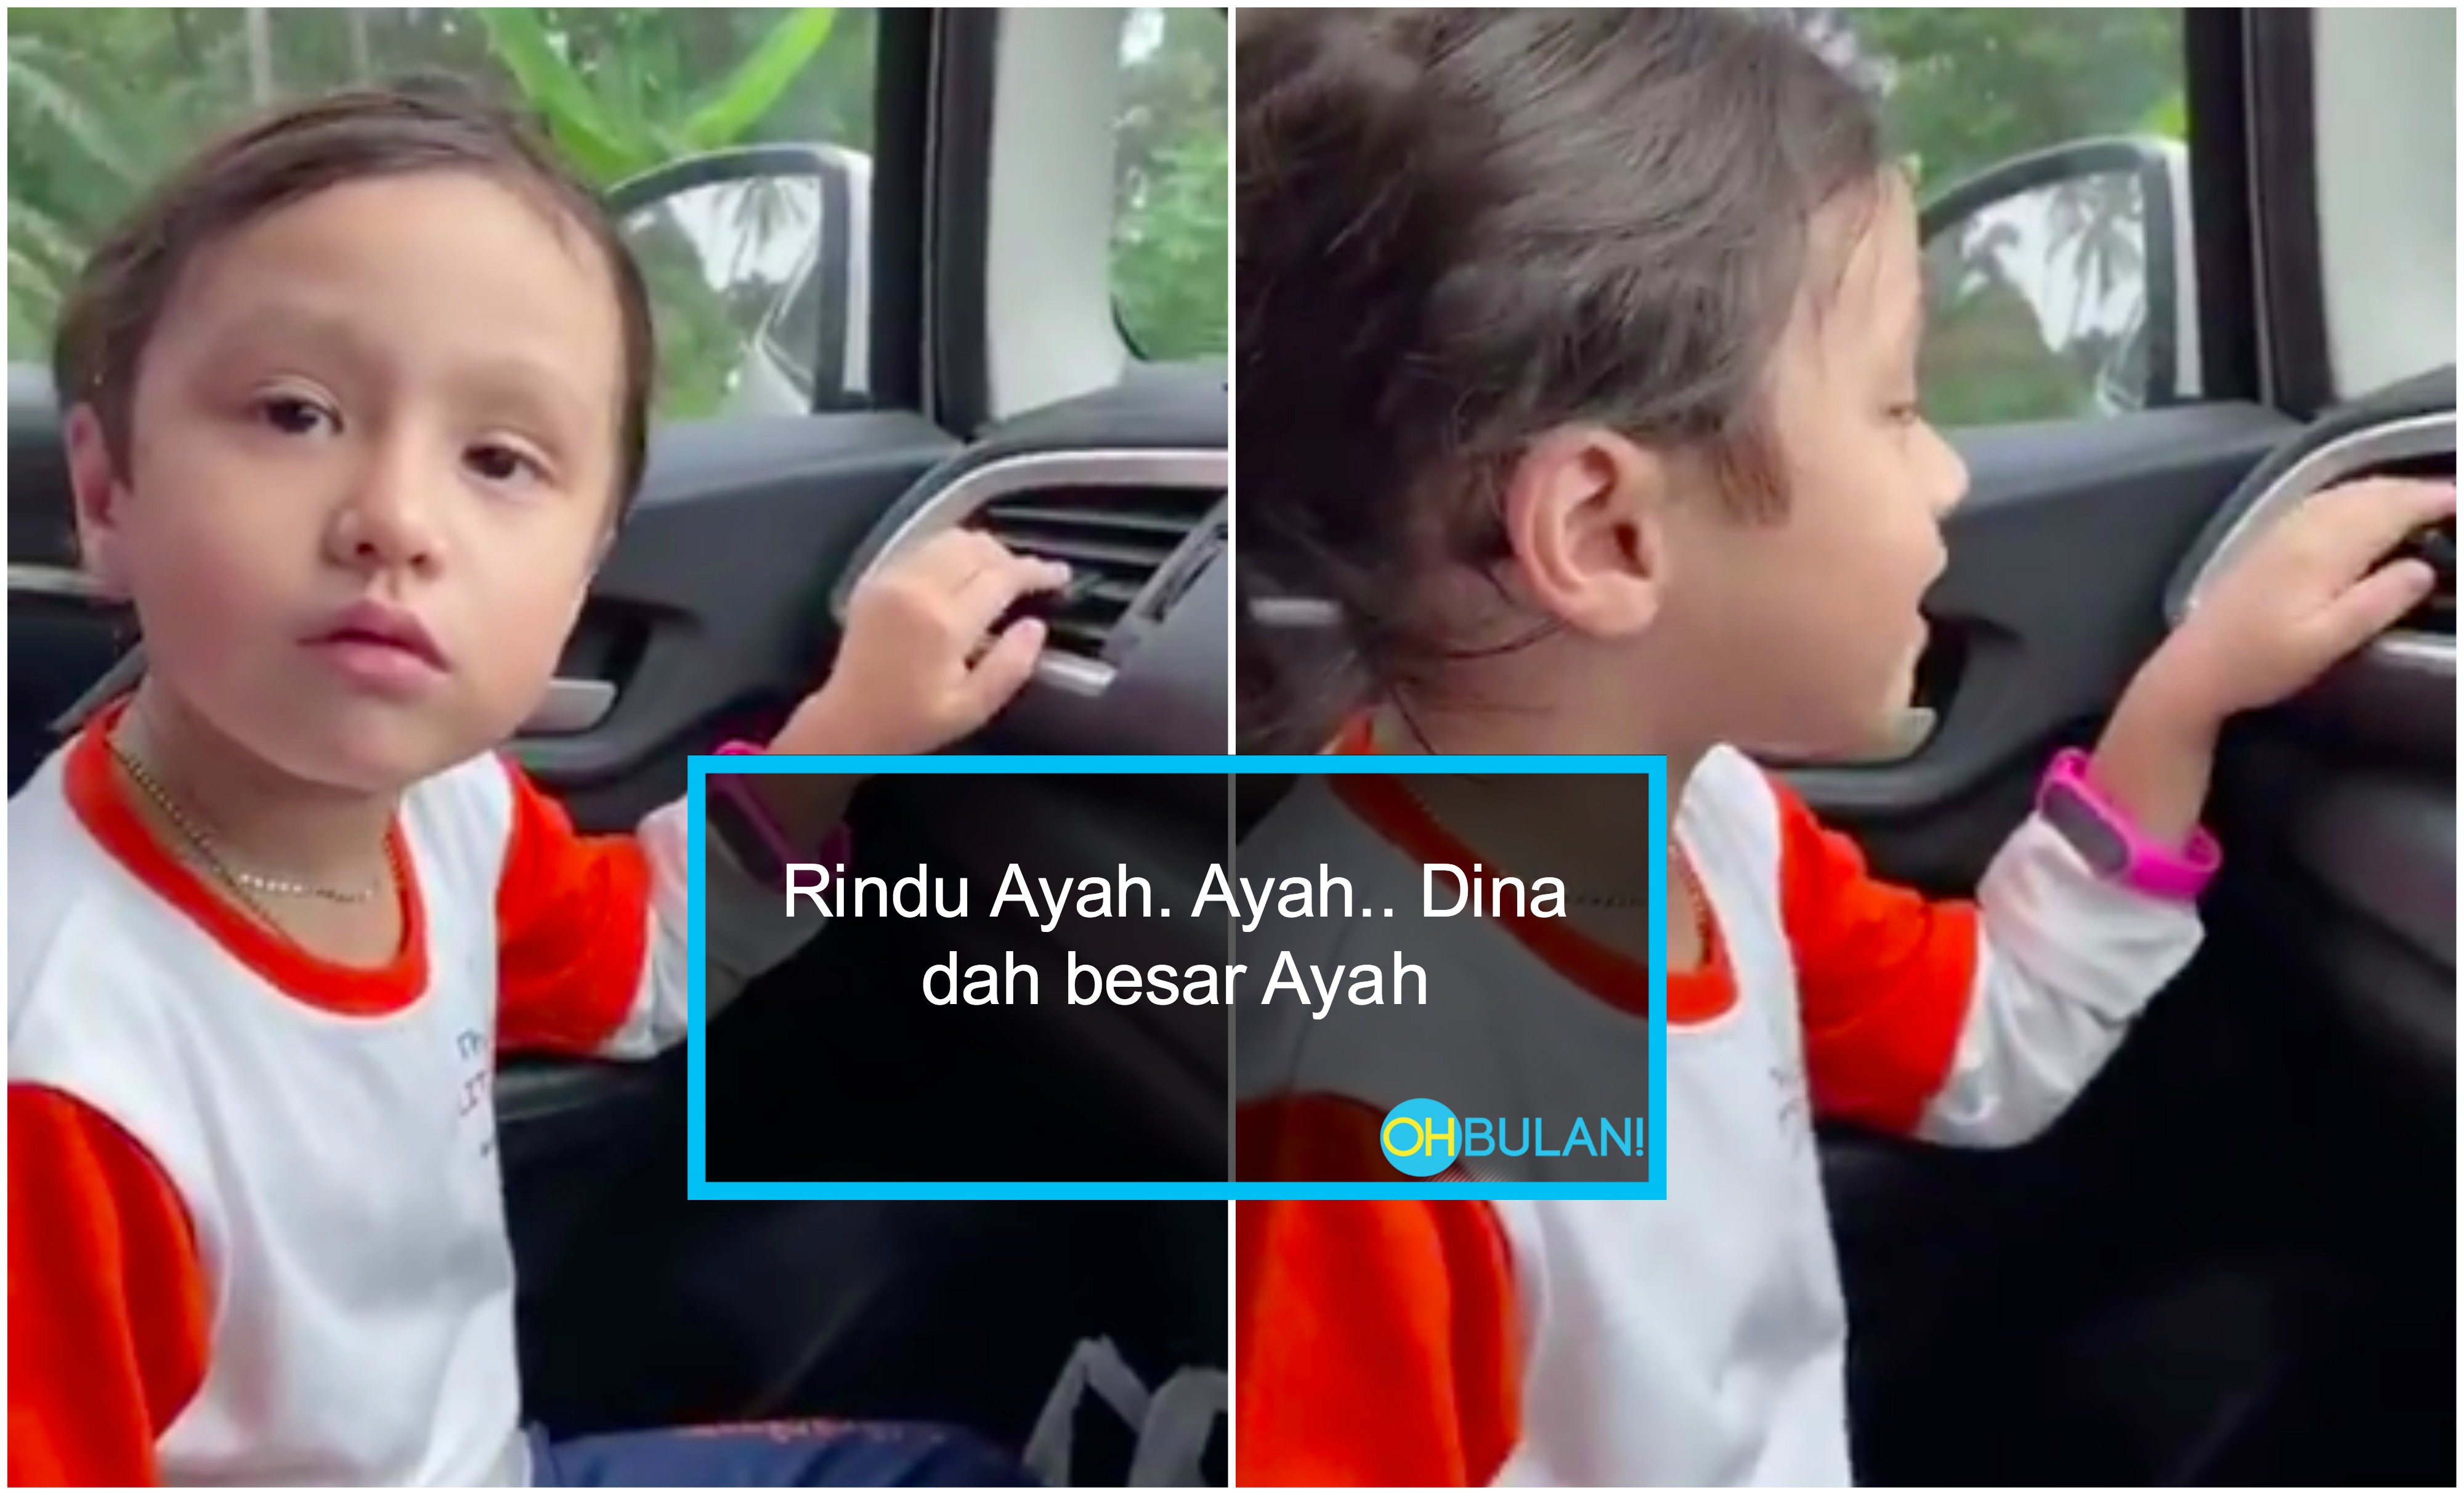 [VIDEO] ‘Dina Dah Besar Ayah, Tapi Ayah Tak Keluar?’ – Anak Yatim Luah Rindu Lawat Kubur Ayah